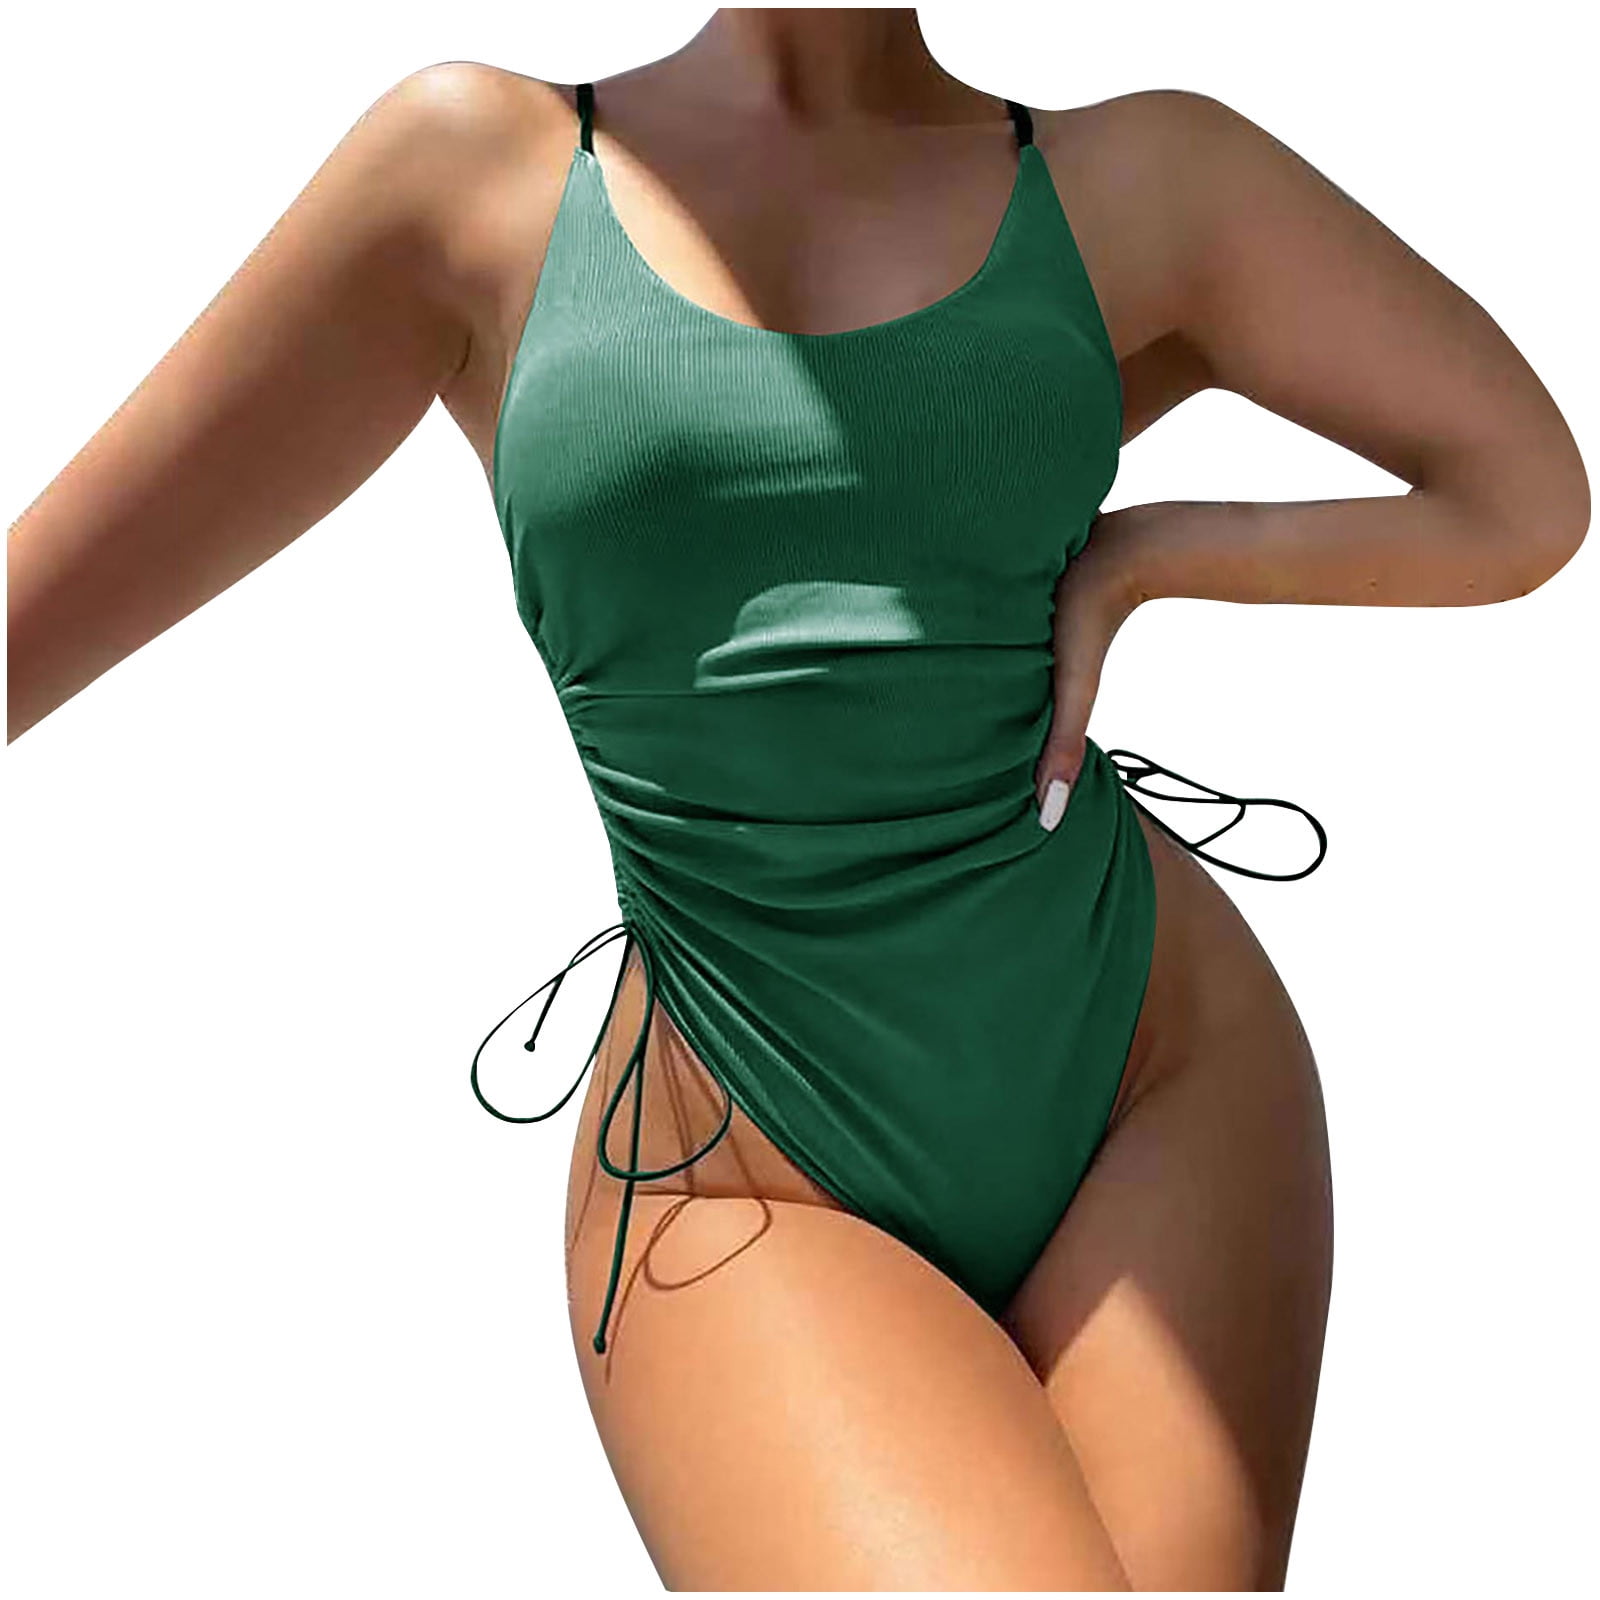 Holipick Women's One Piece Swimsuit Cutout High Neck Bathing Suits Tummy  Control Swimwear for Teen Girls, Black, Medium